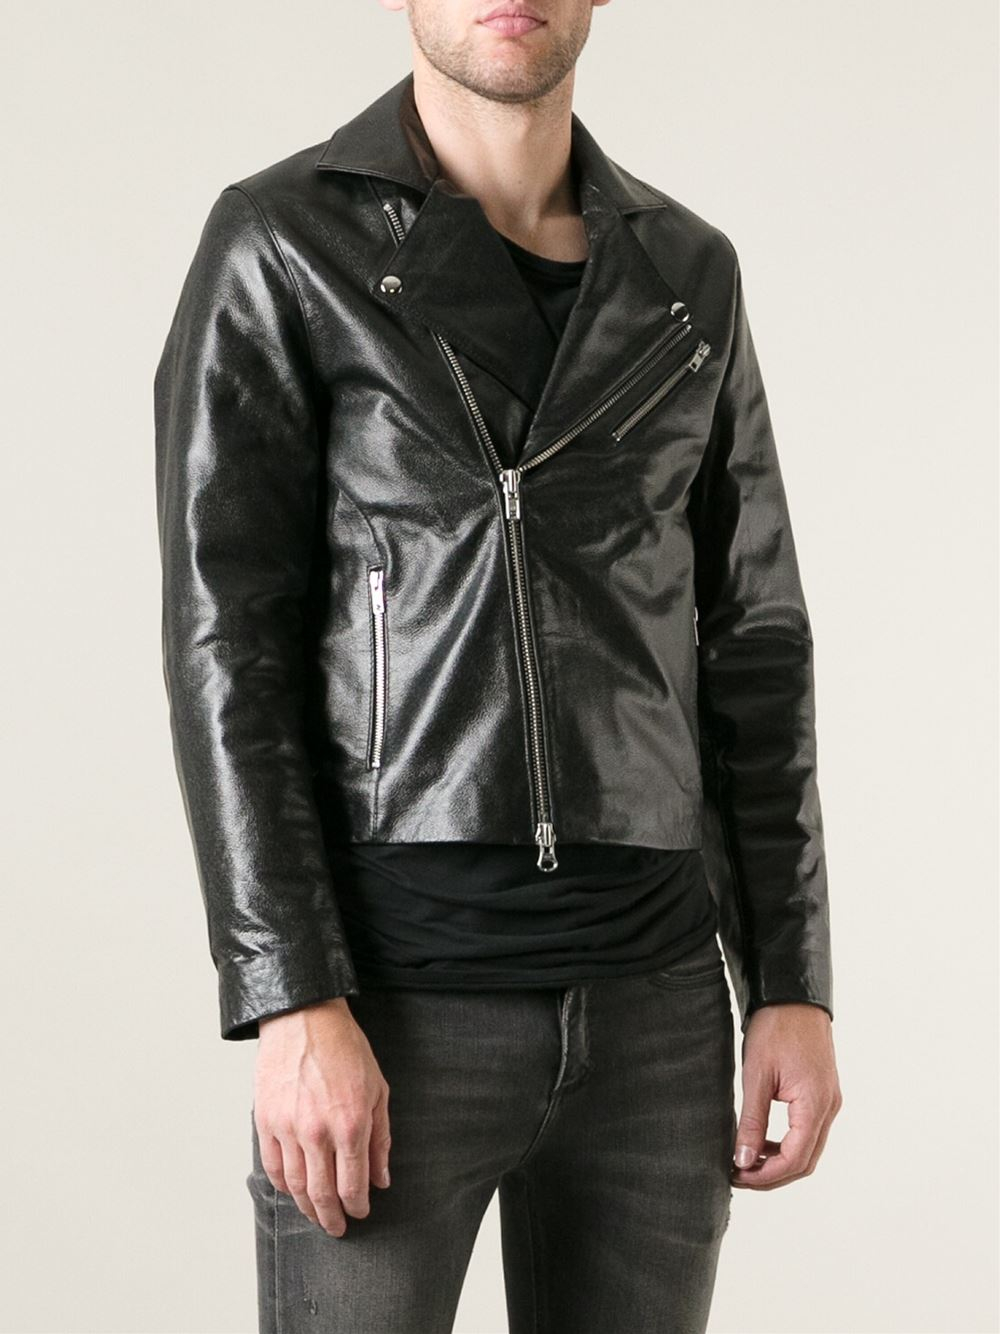 MKI Miyuki-Zoku Leather High Grain Biker Jacket in Black for Men - Lyst